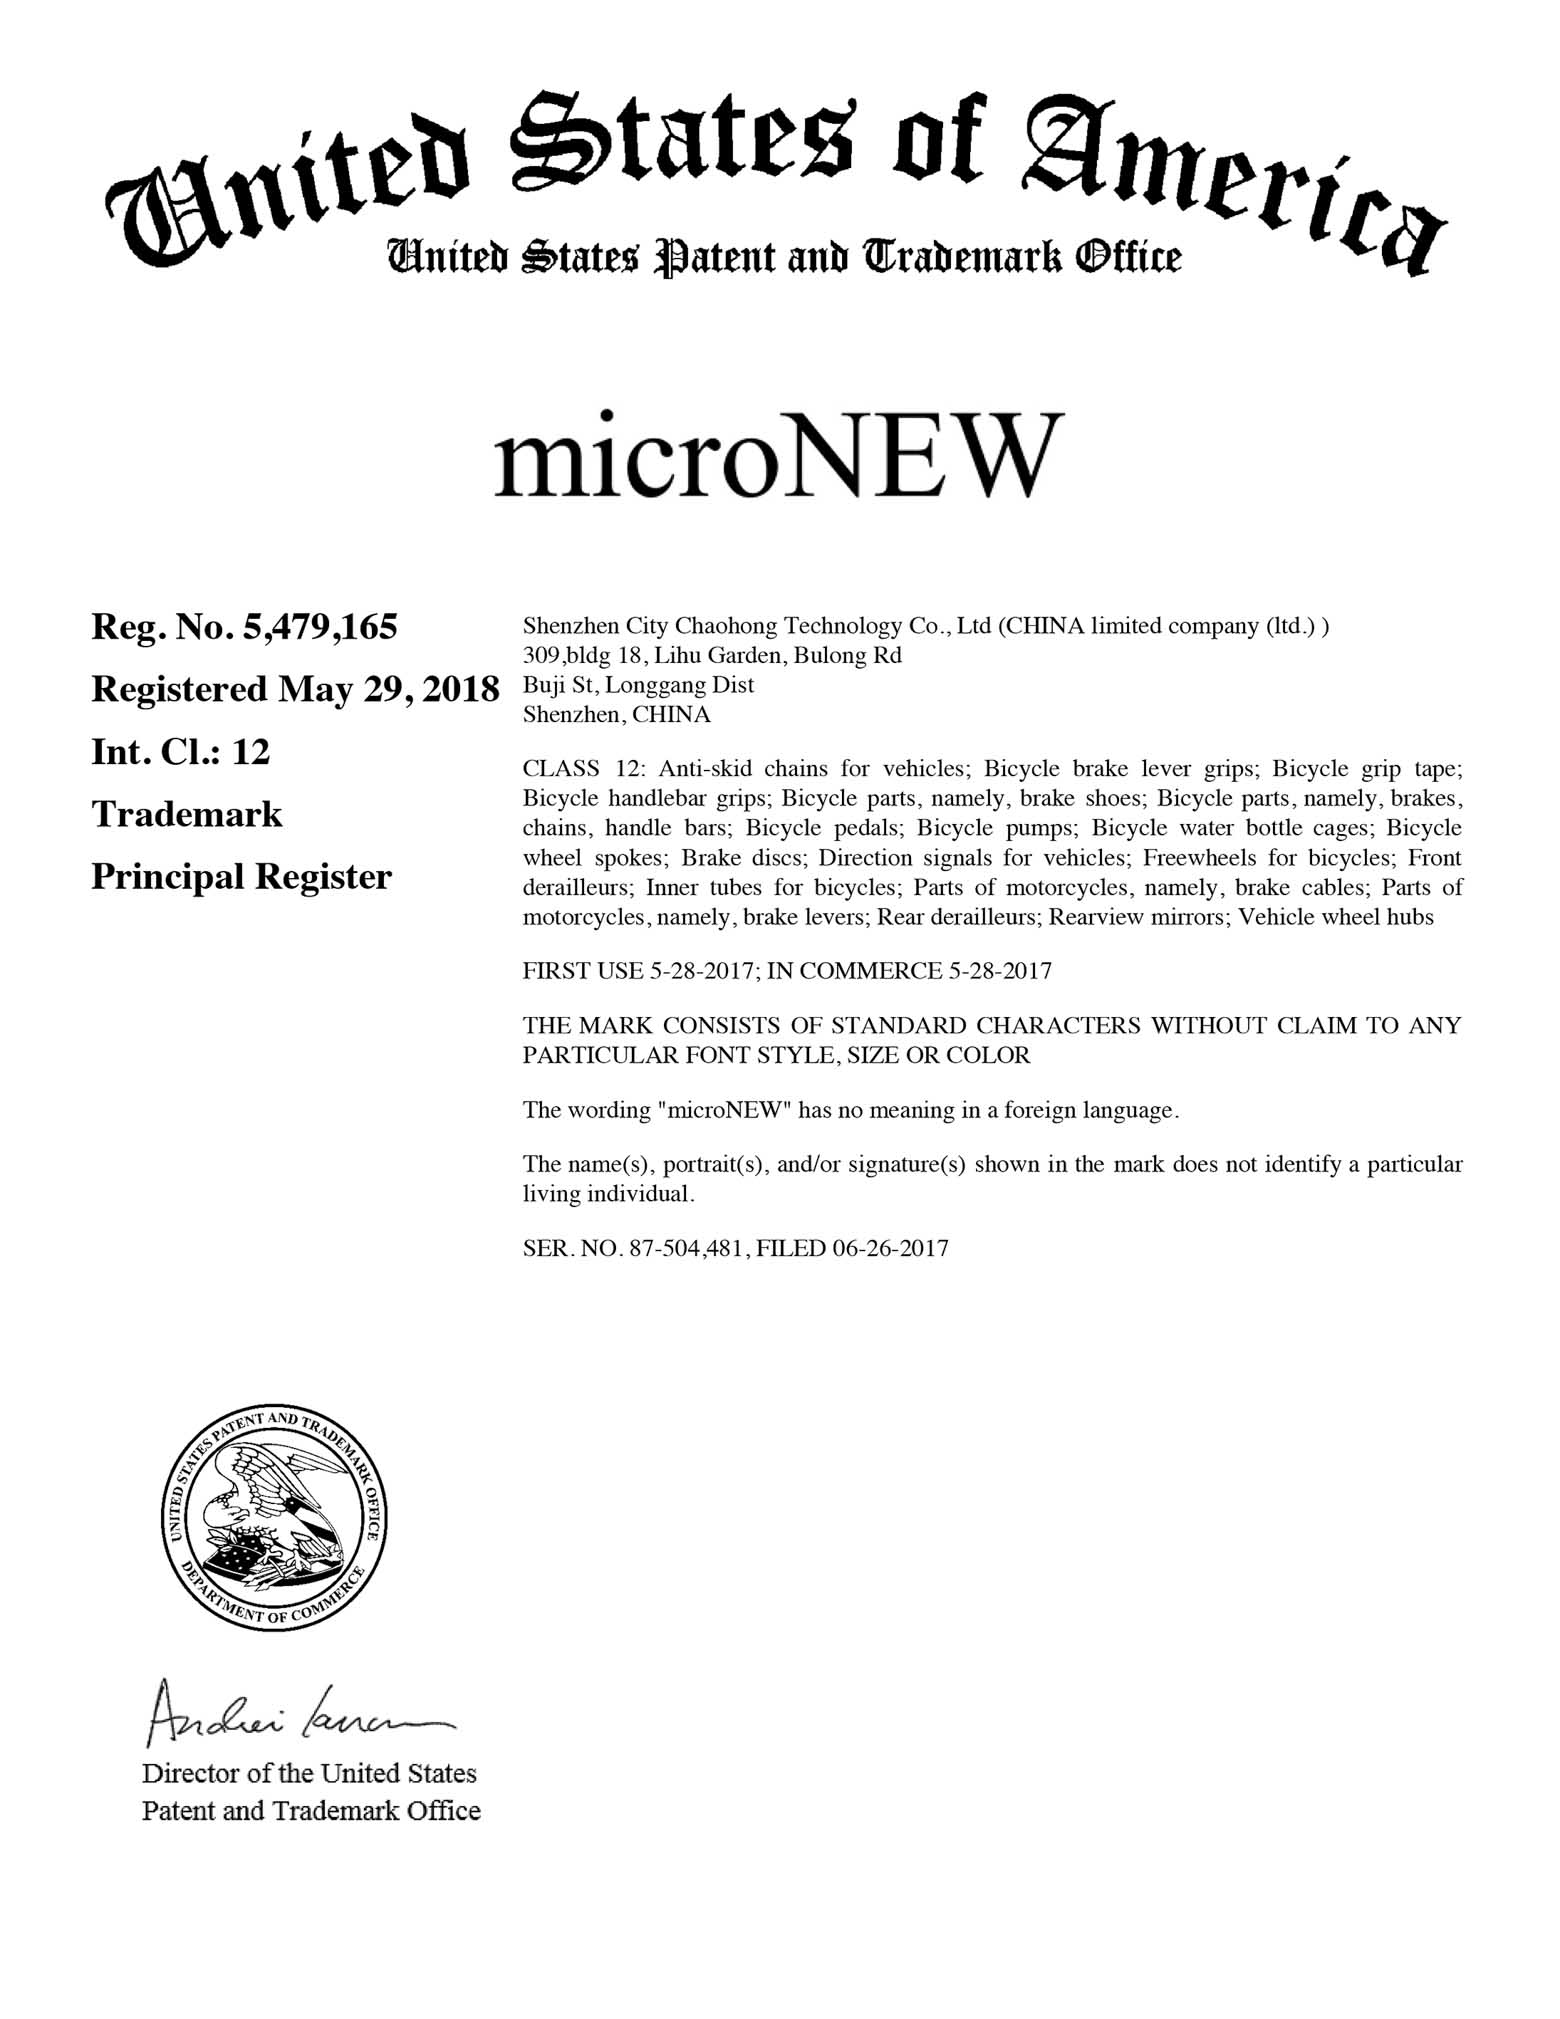 US Trademark 5,479,165 - microNEW main image